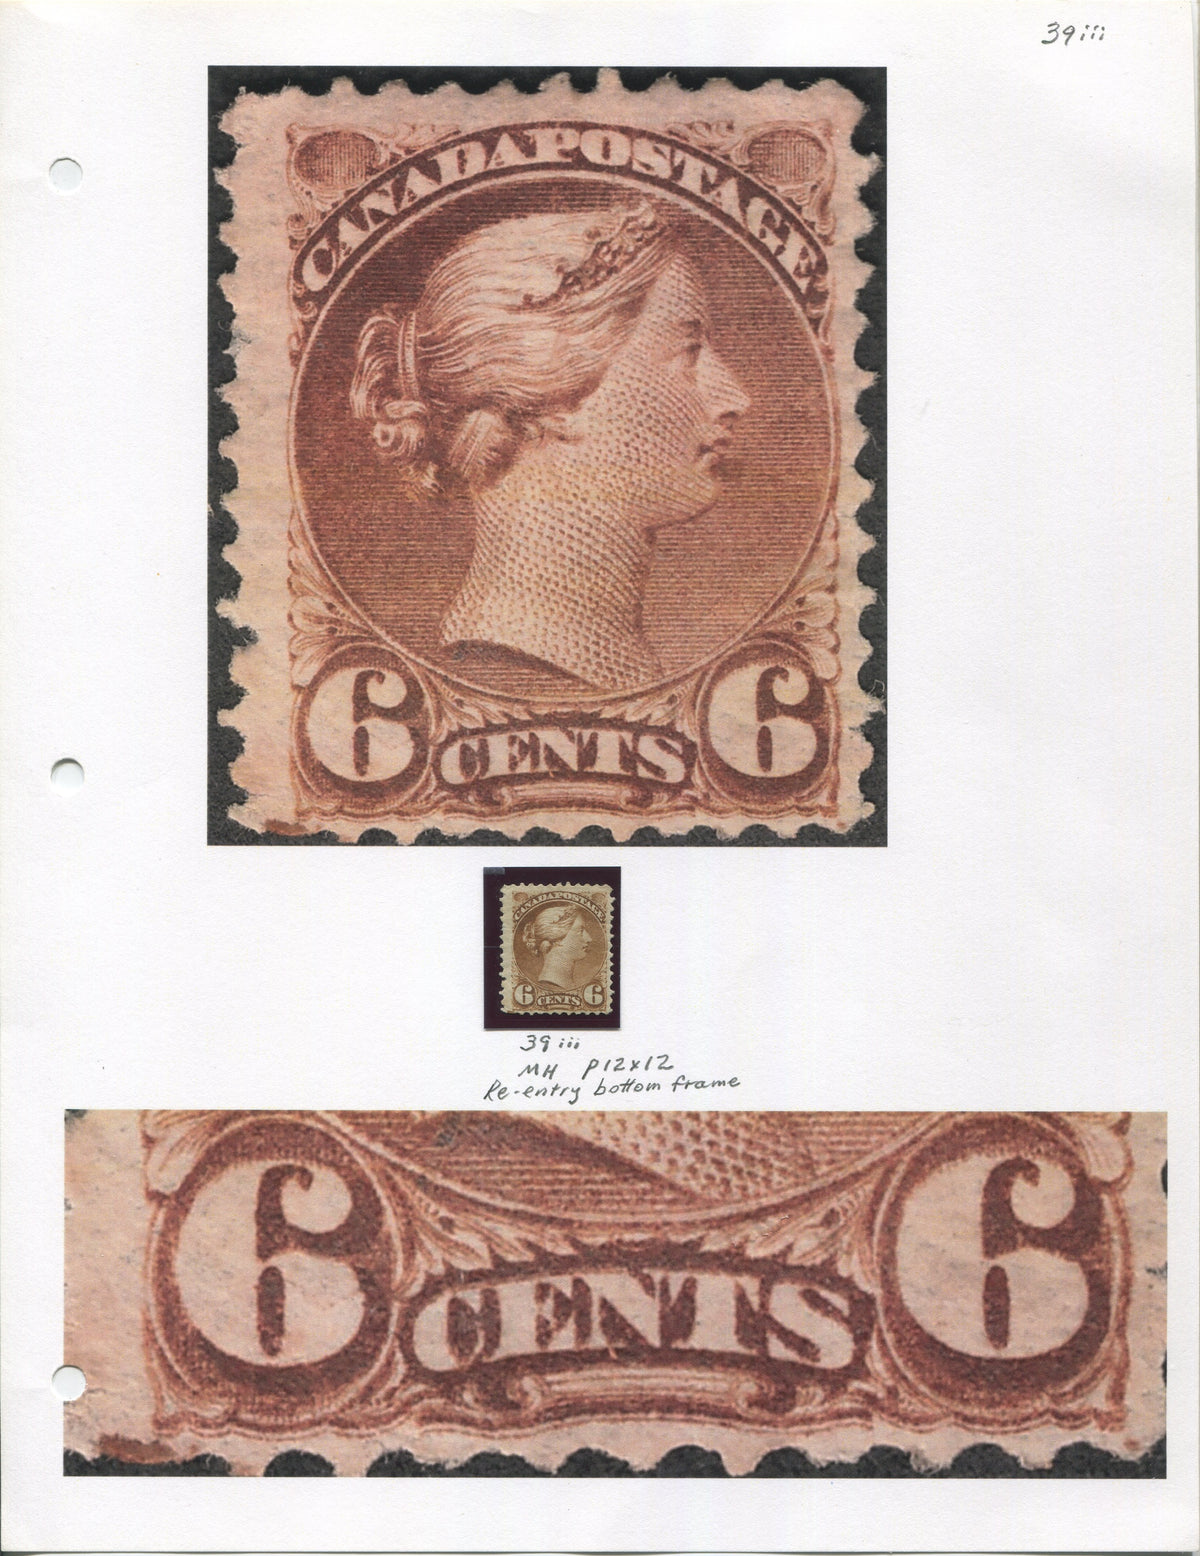 0039CA2206 - Canada #39iii - Mint, Semi-Major Re-Entry